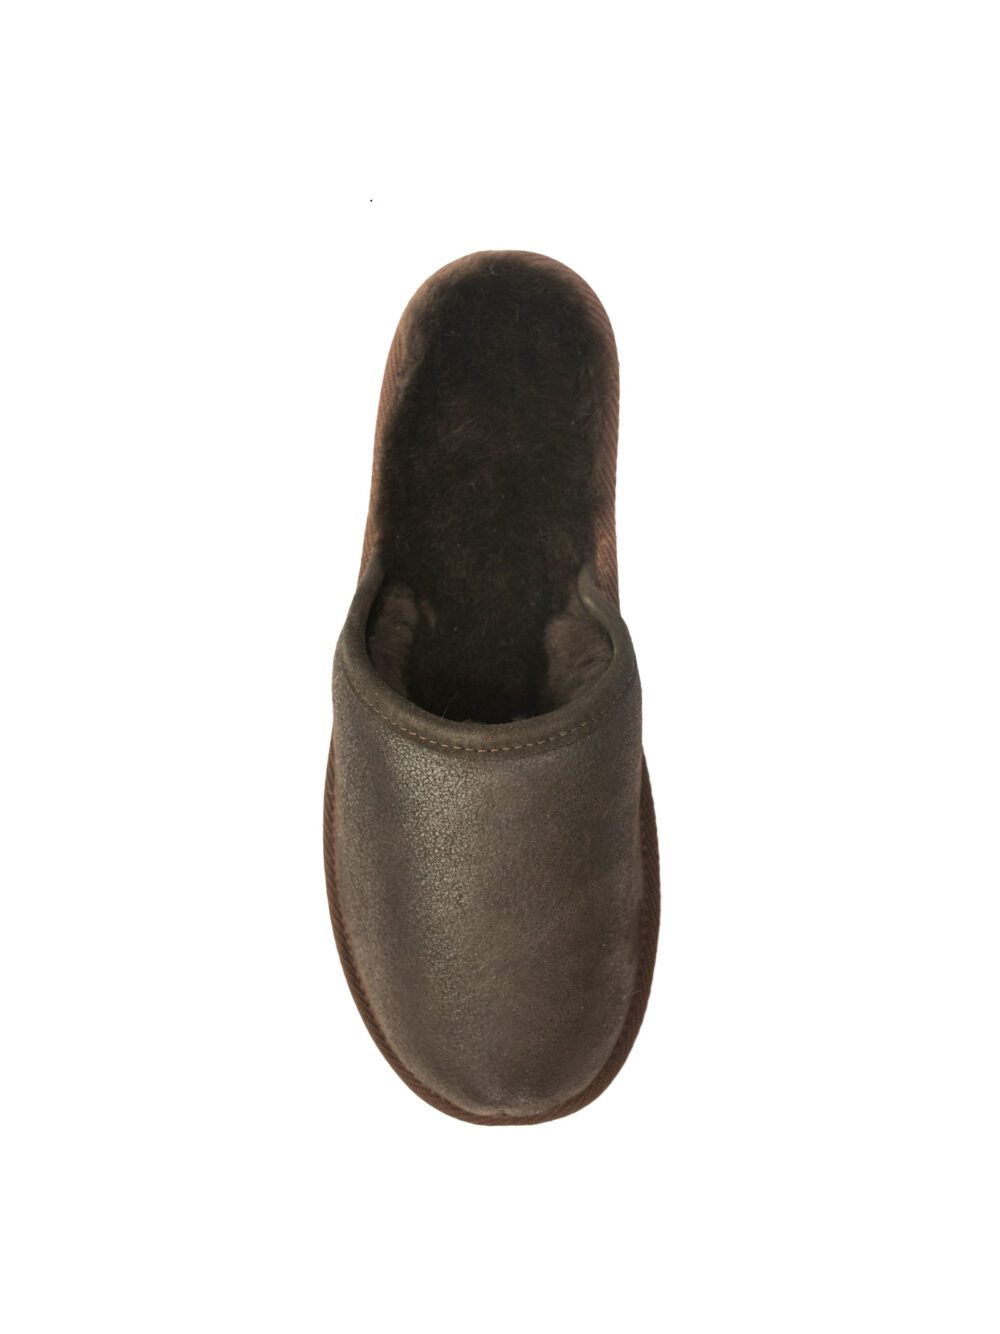 Men’s slippers Caldor Brown Accessories Producent owczych skór dekoracyjnych | Tannery Sheepskin | KalSkór 5